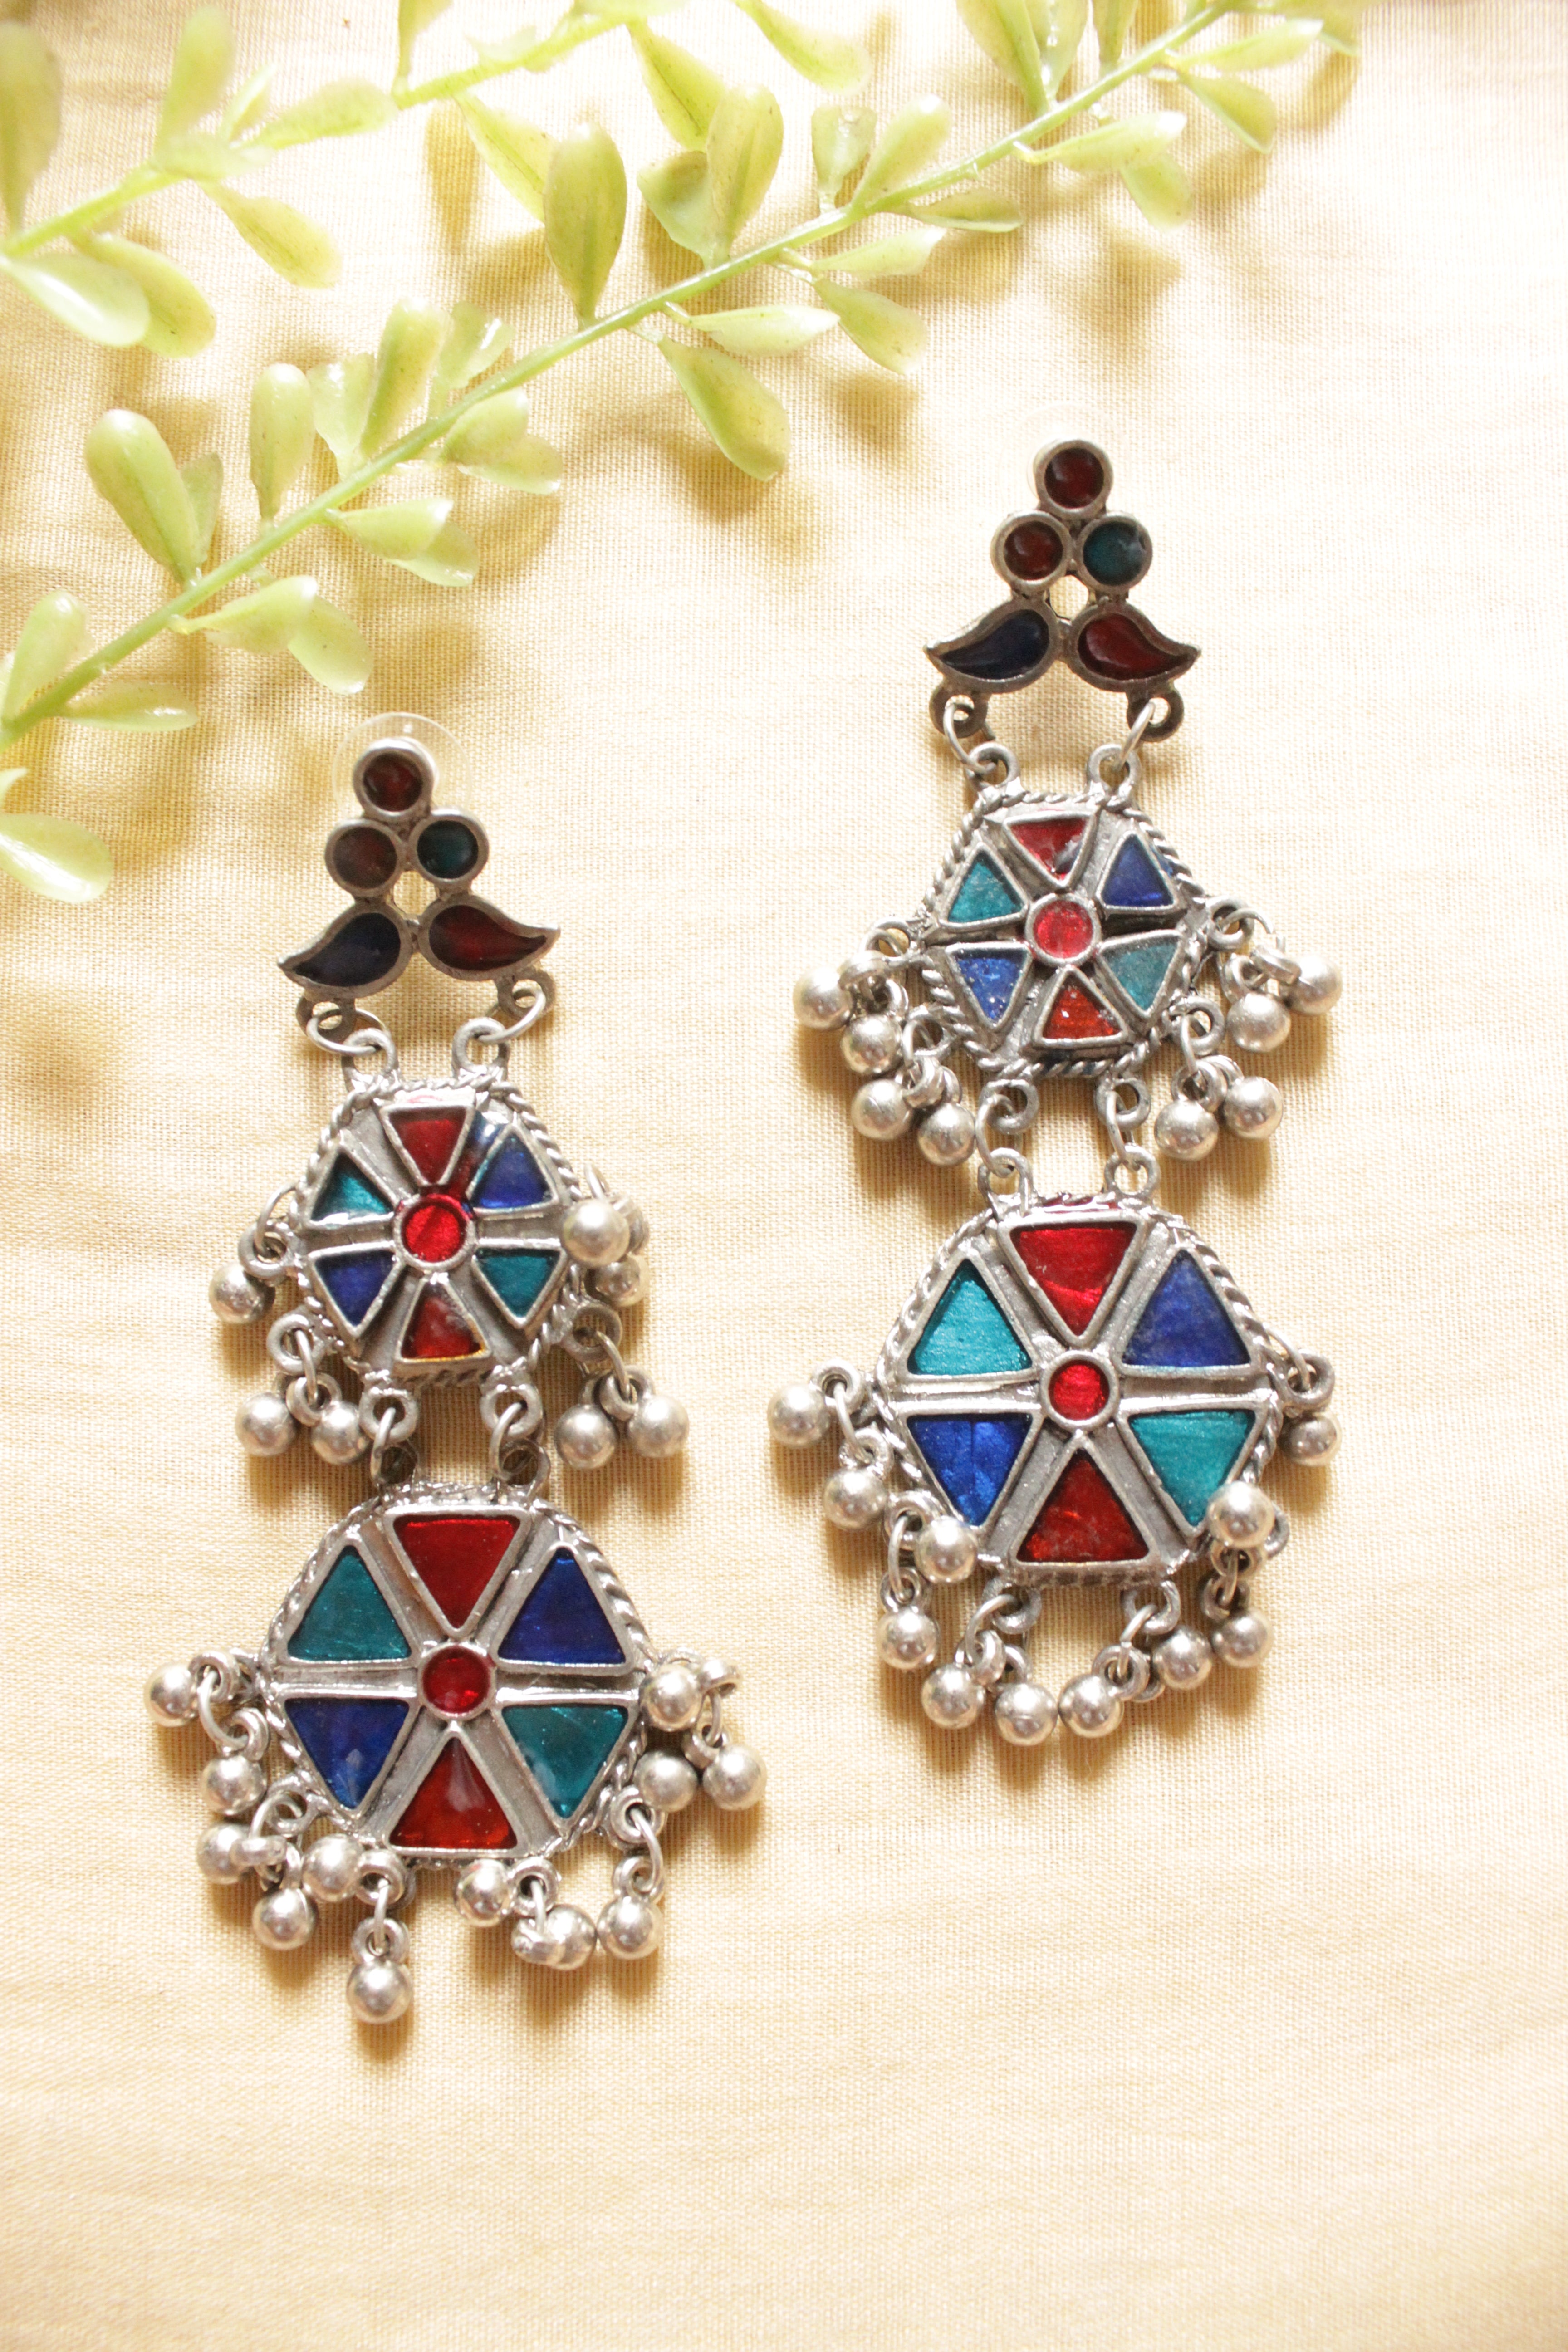 Red & Blue Hexagon Enamel Painted Afghani Earrings with Metal Bead Charms